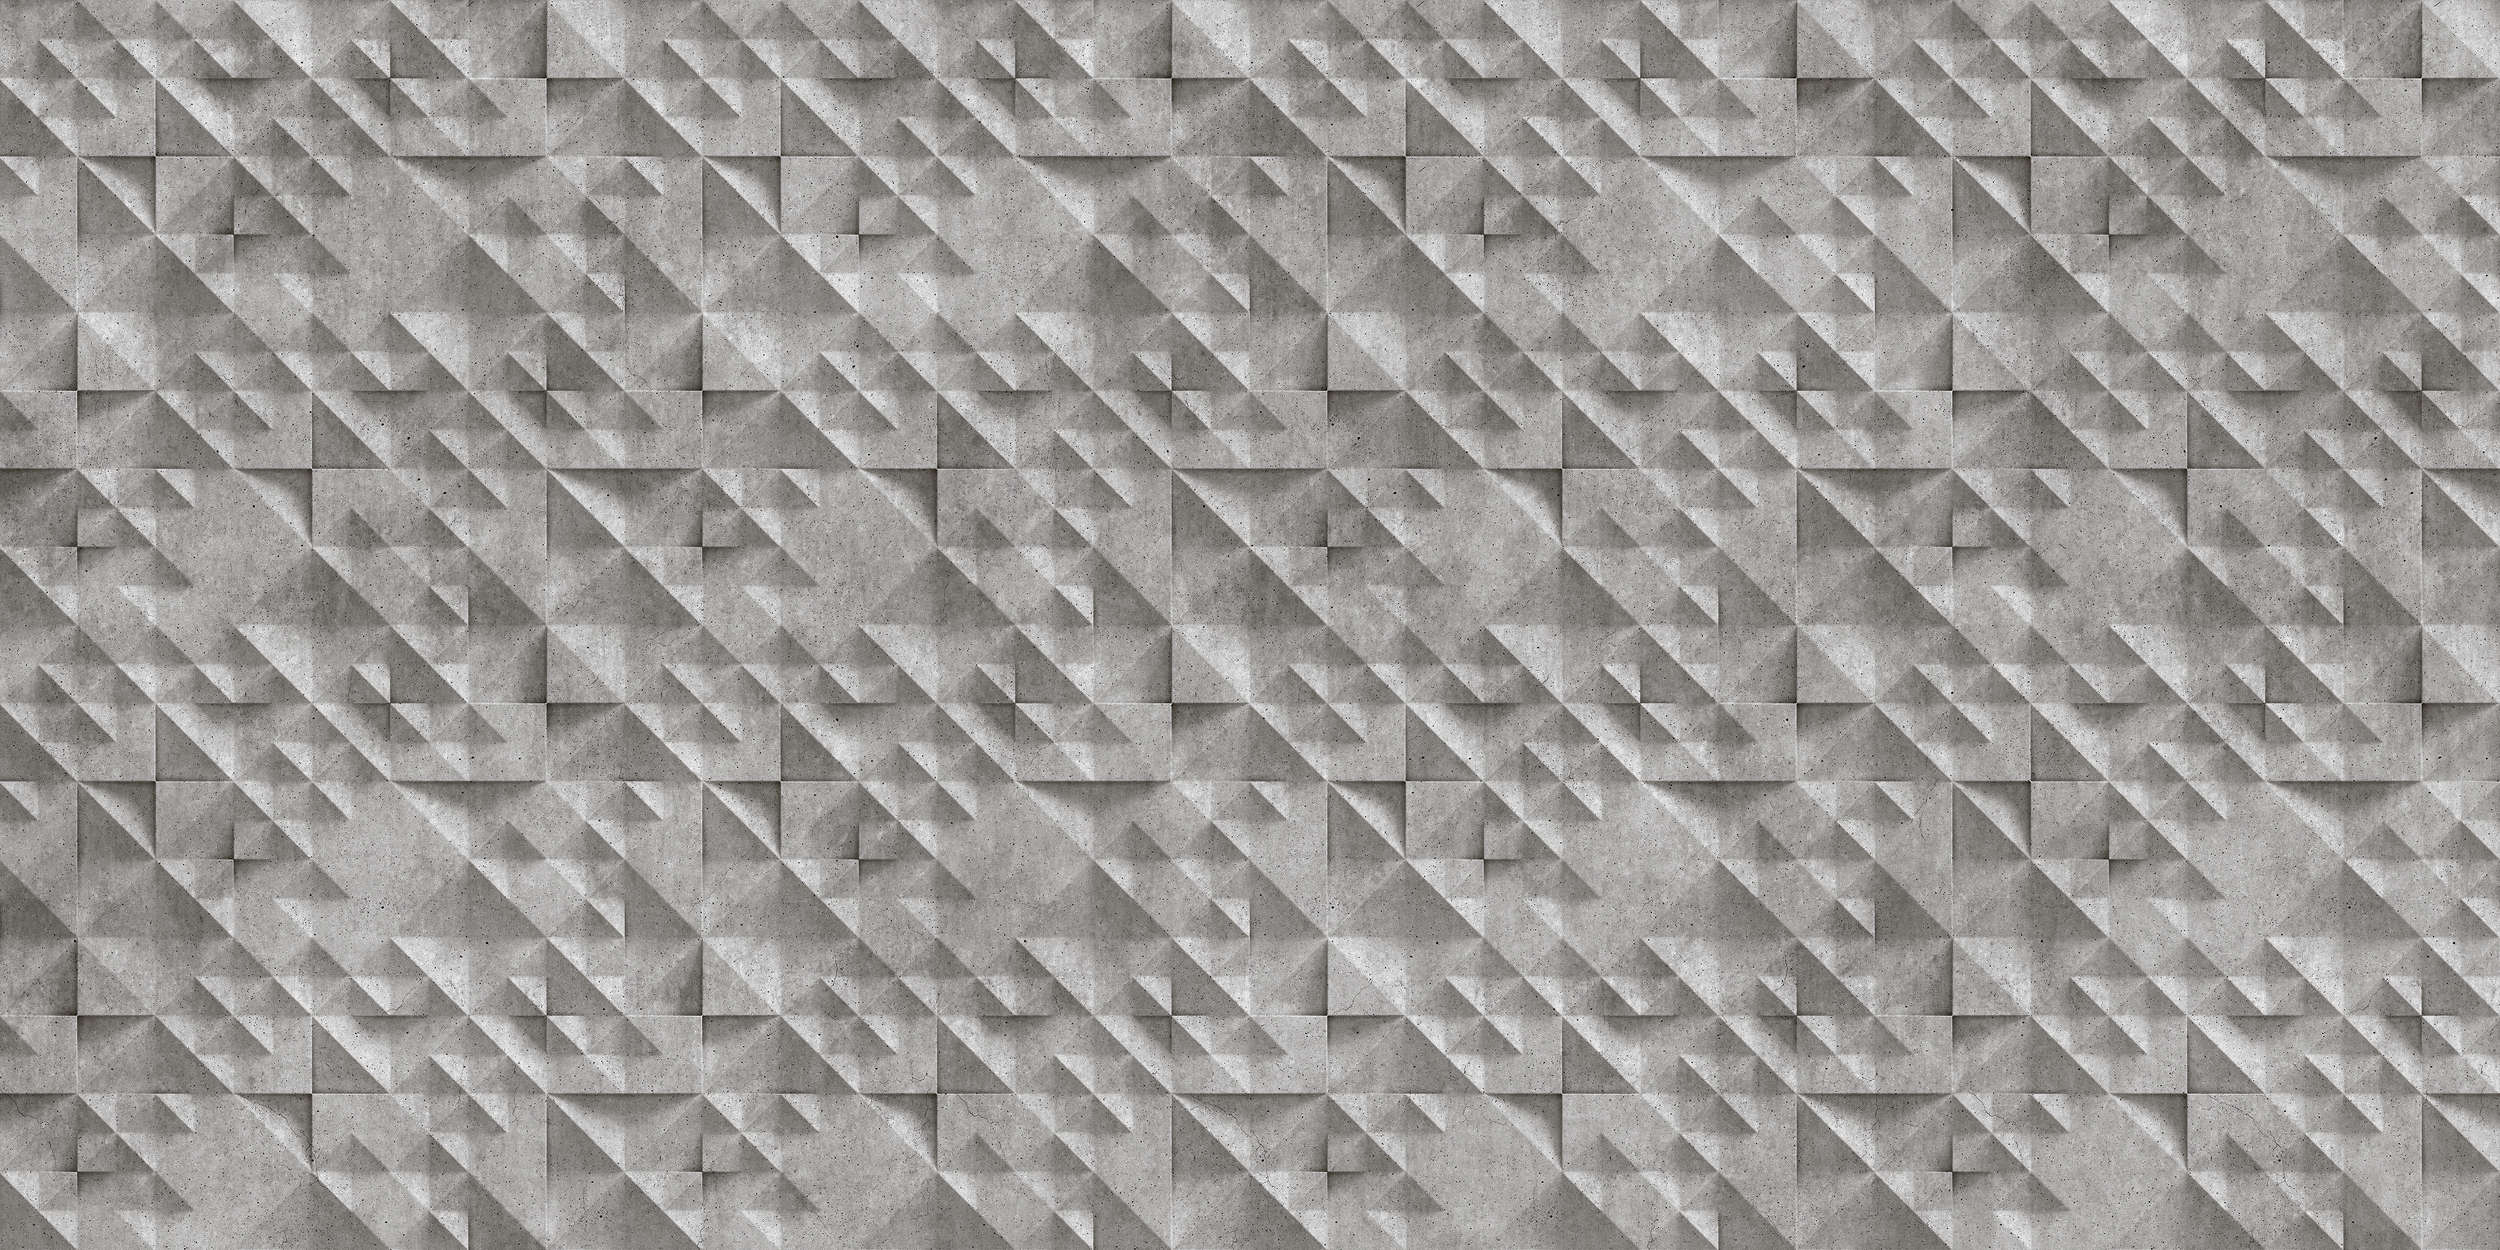             Concrete 2 - Cool 3D beton ruitjes behang - grijs, zwart | parelmoer glad vlies
        